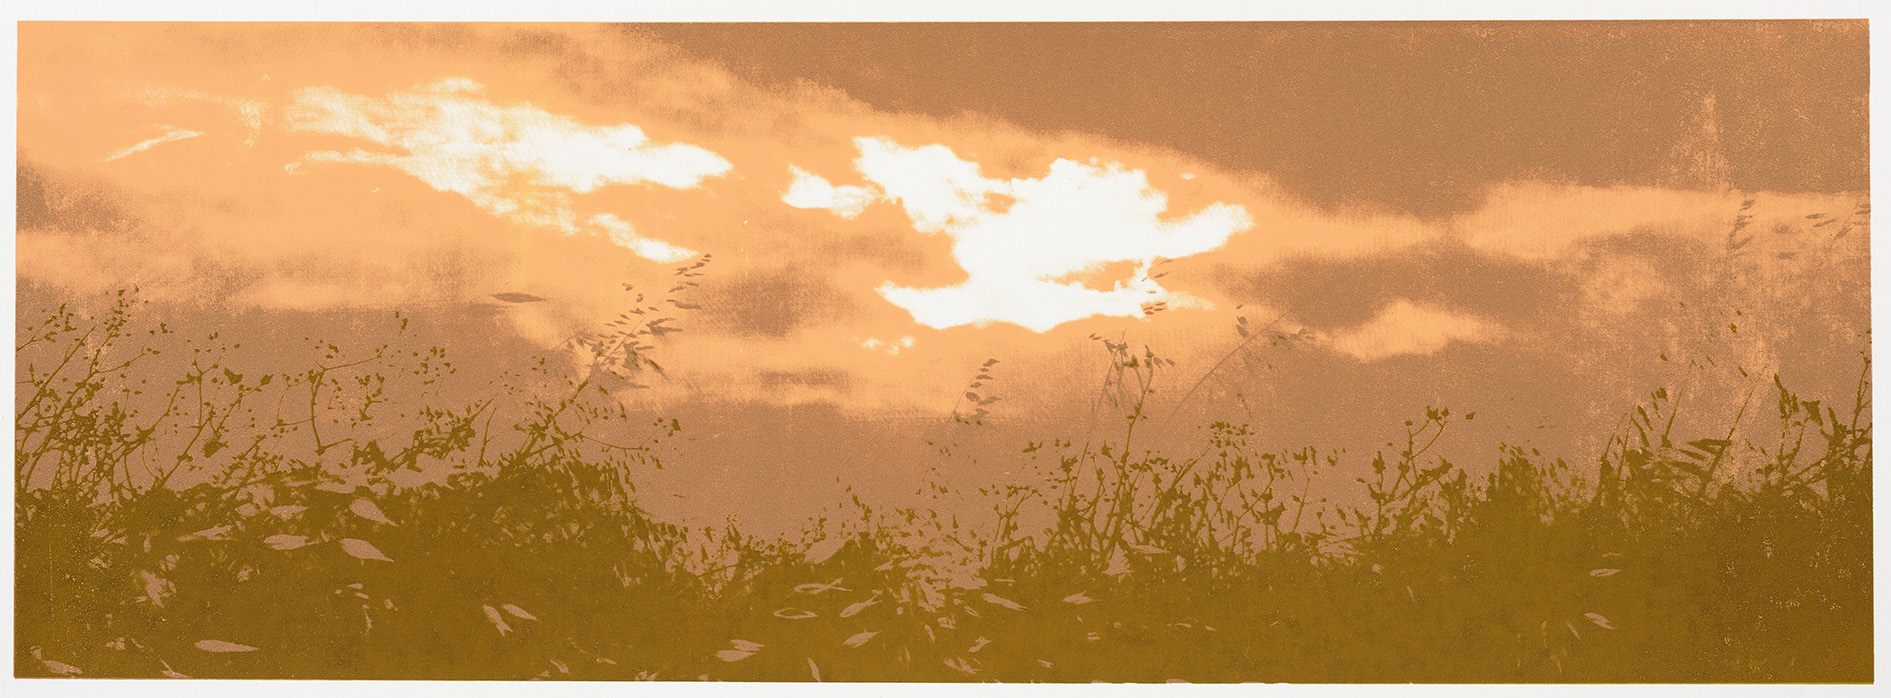 "Change of Seasons IV (fall)", 35 x 100 cm. silkscreenprint (2015)